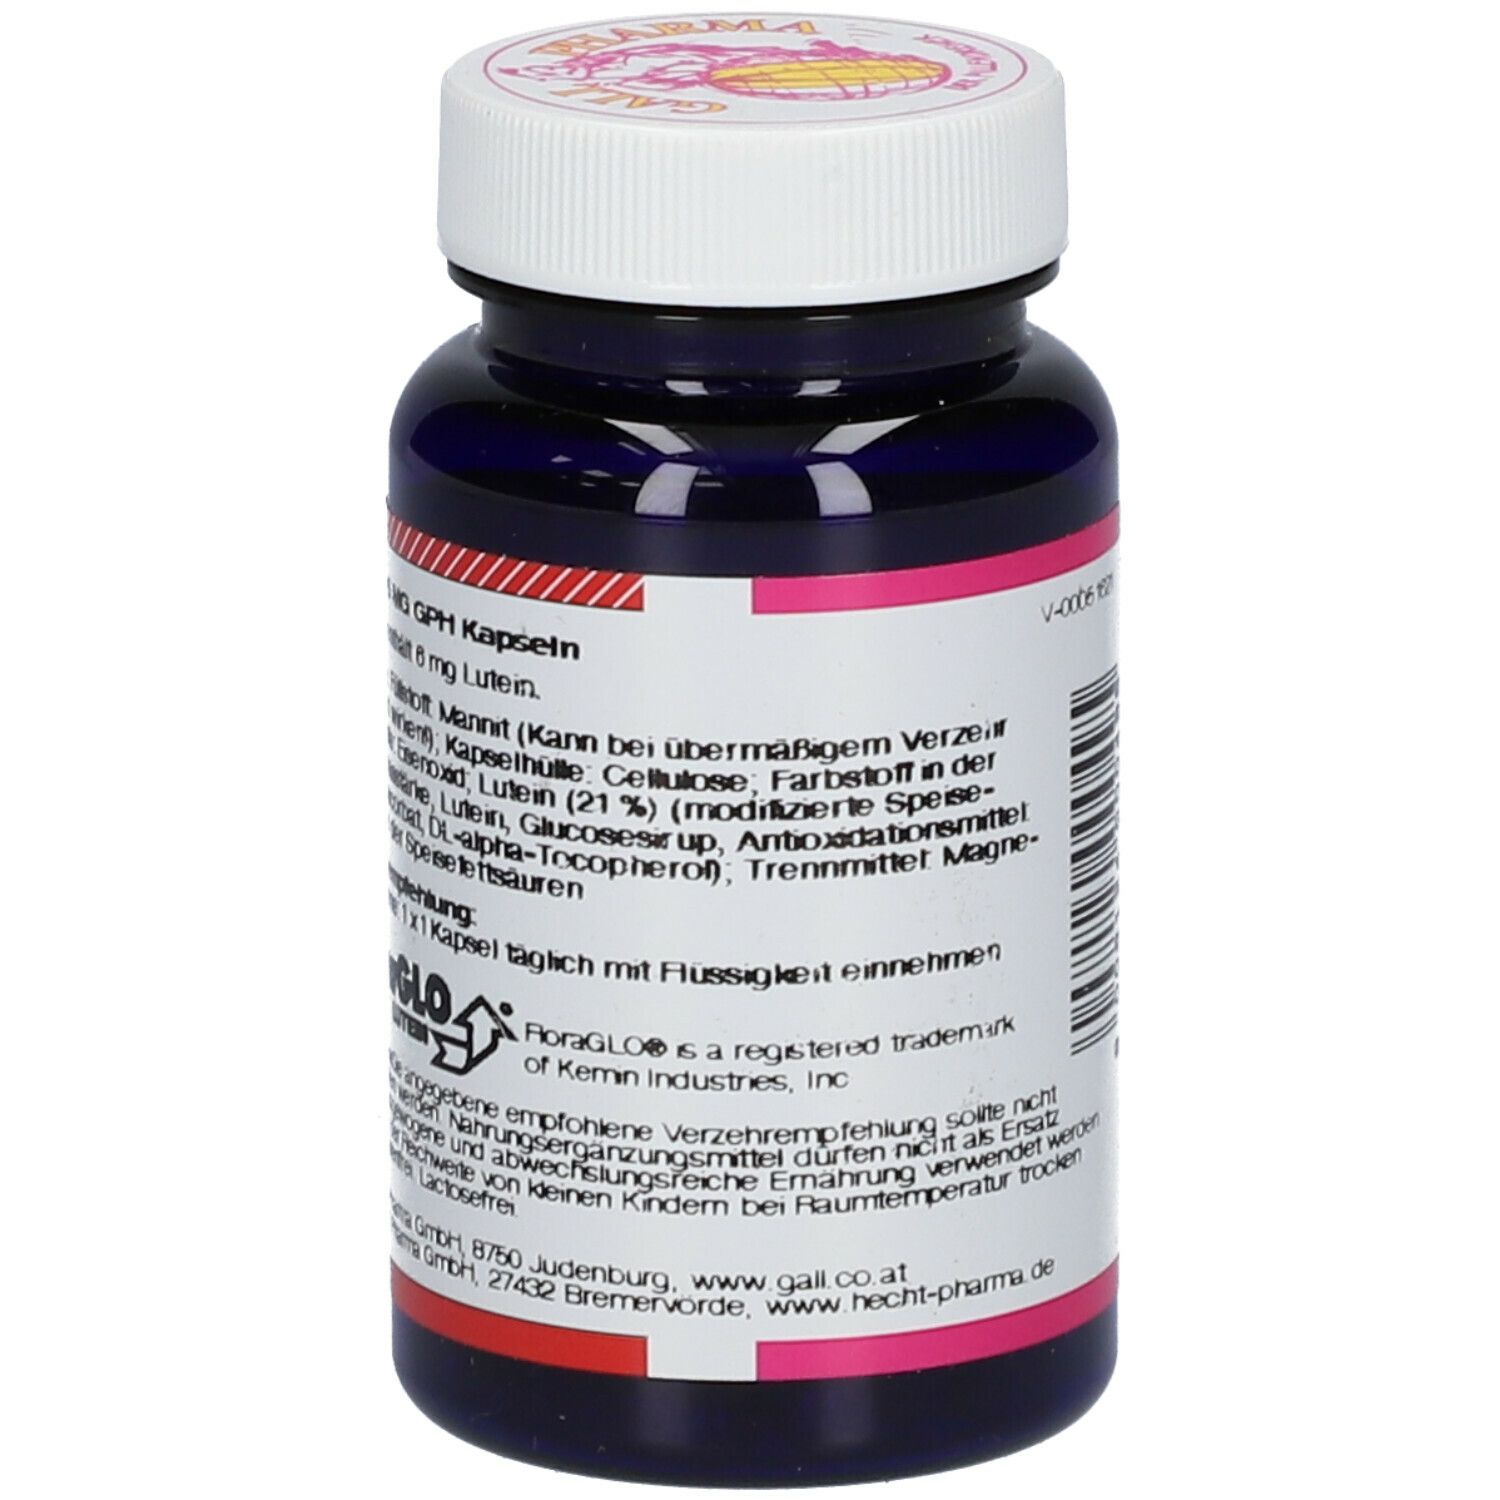 GALL PHARMA Lutein 6 mg GPH Kapseln